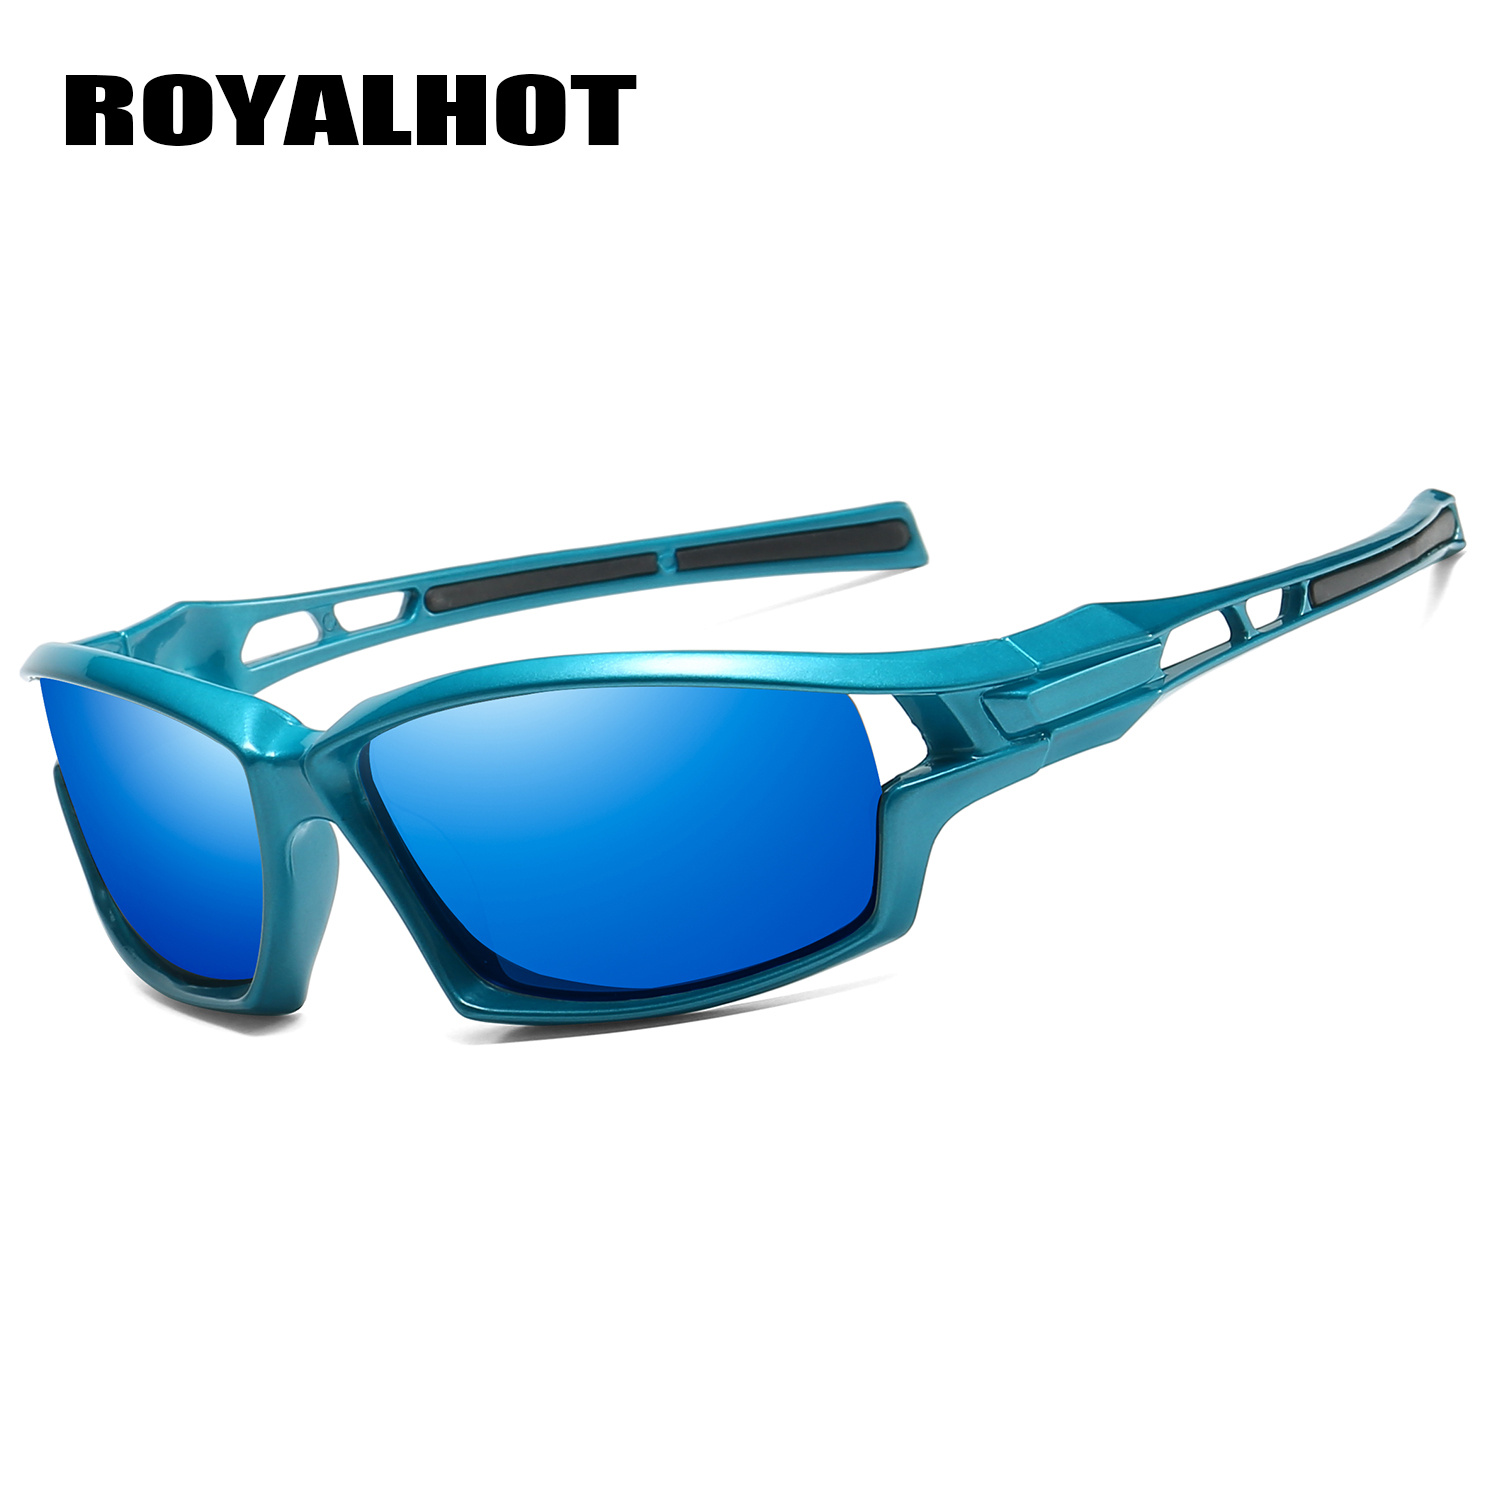 Men's Polarized Blue Sports Sunglasses Vintage PC Sun Glasses Retro Mixed Color Eyewear 900185,Googles VR Pit Vipers,Goggles Sunglasses,Vision Pro